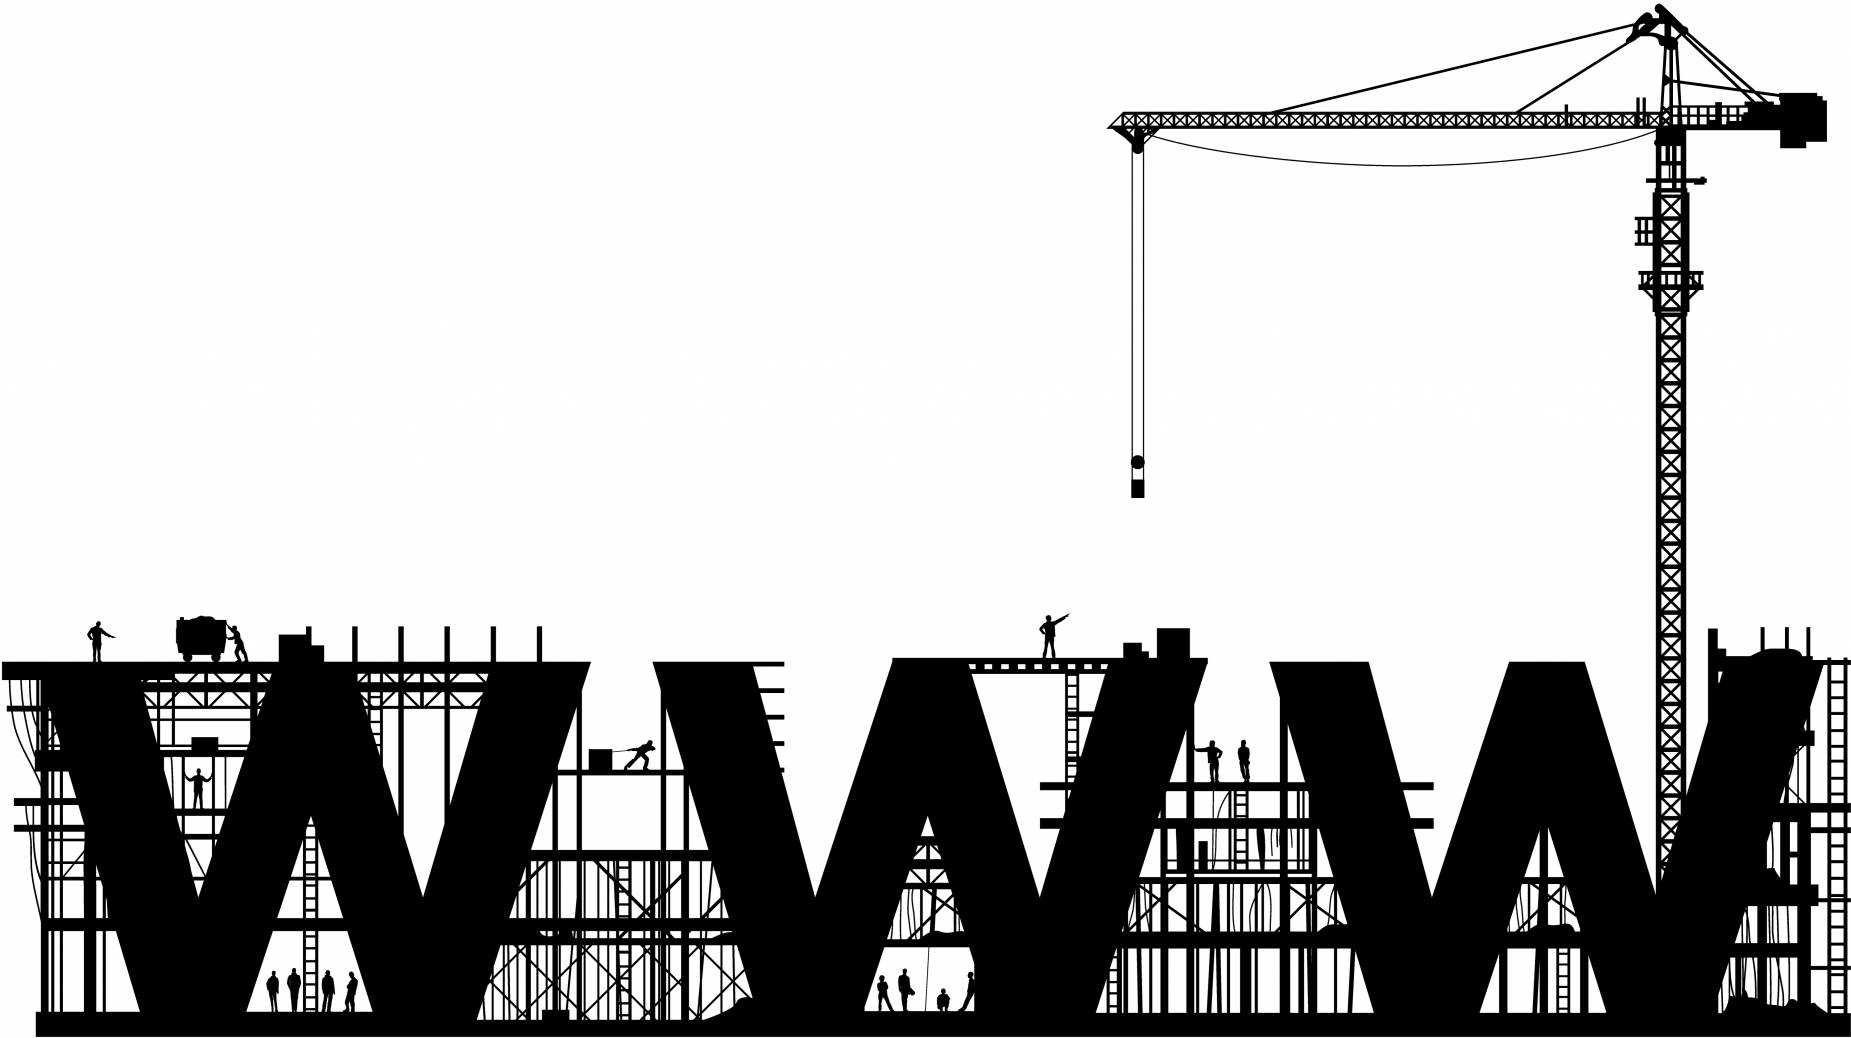 Website Under Construction With Crane Background